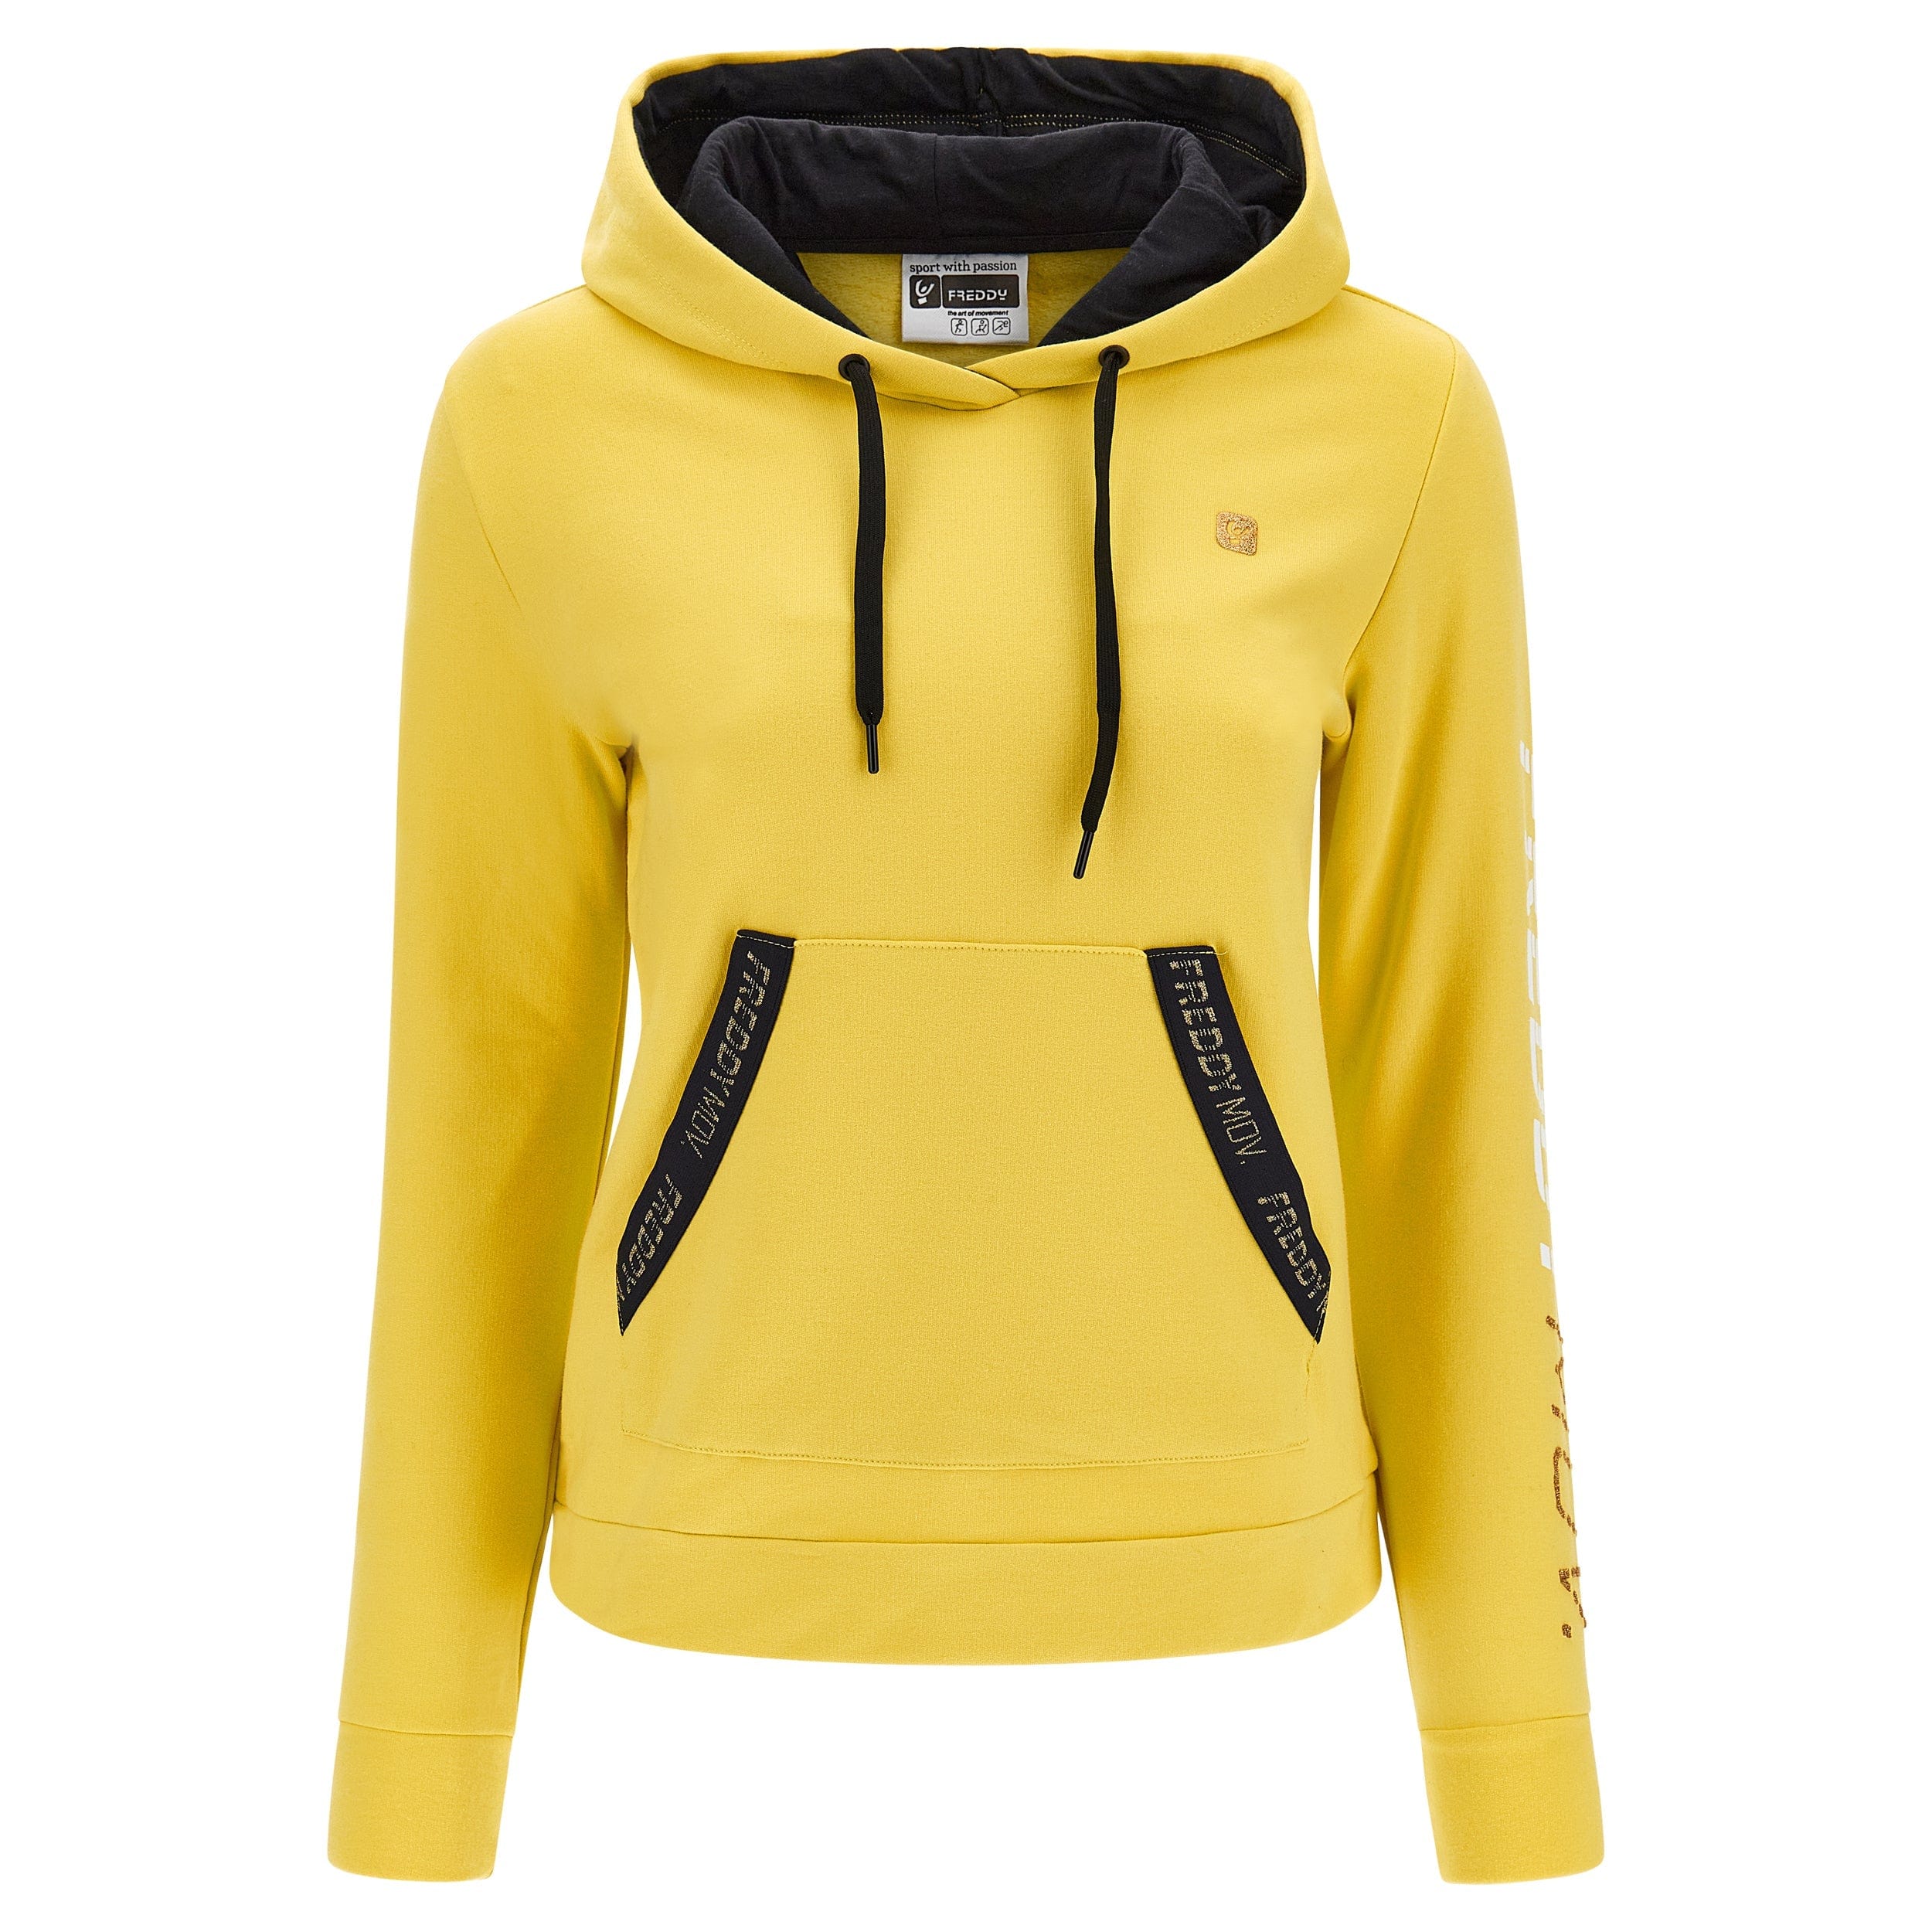 Sweatshirt with hood - Yellow + Gold glitter details 1